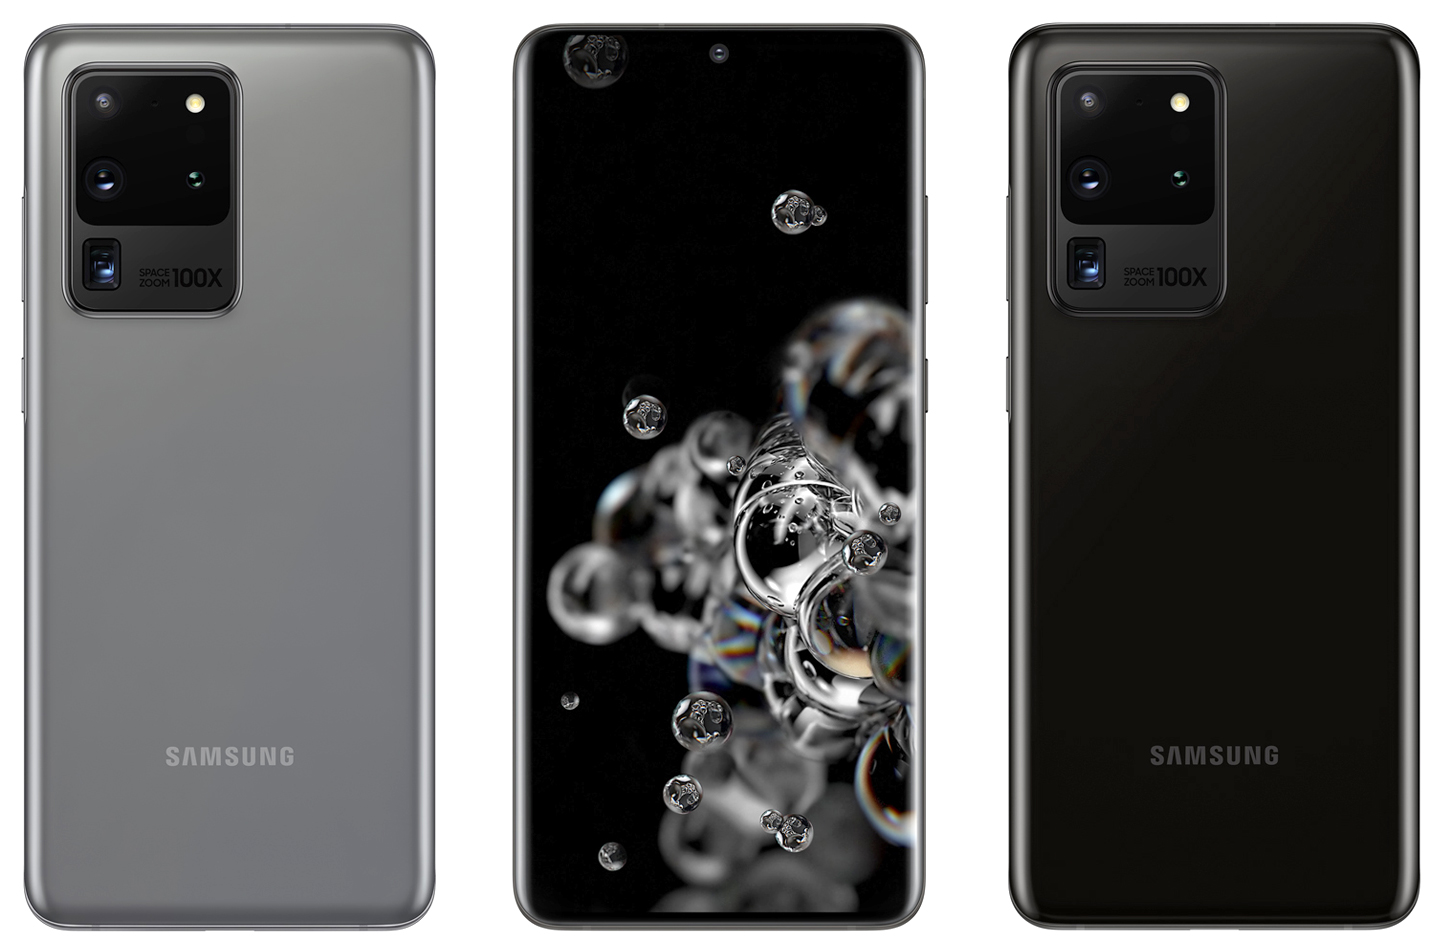 Samsung Galaxy S20 Ultra smartphone